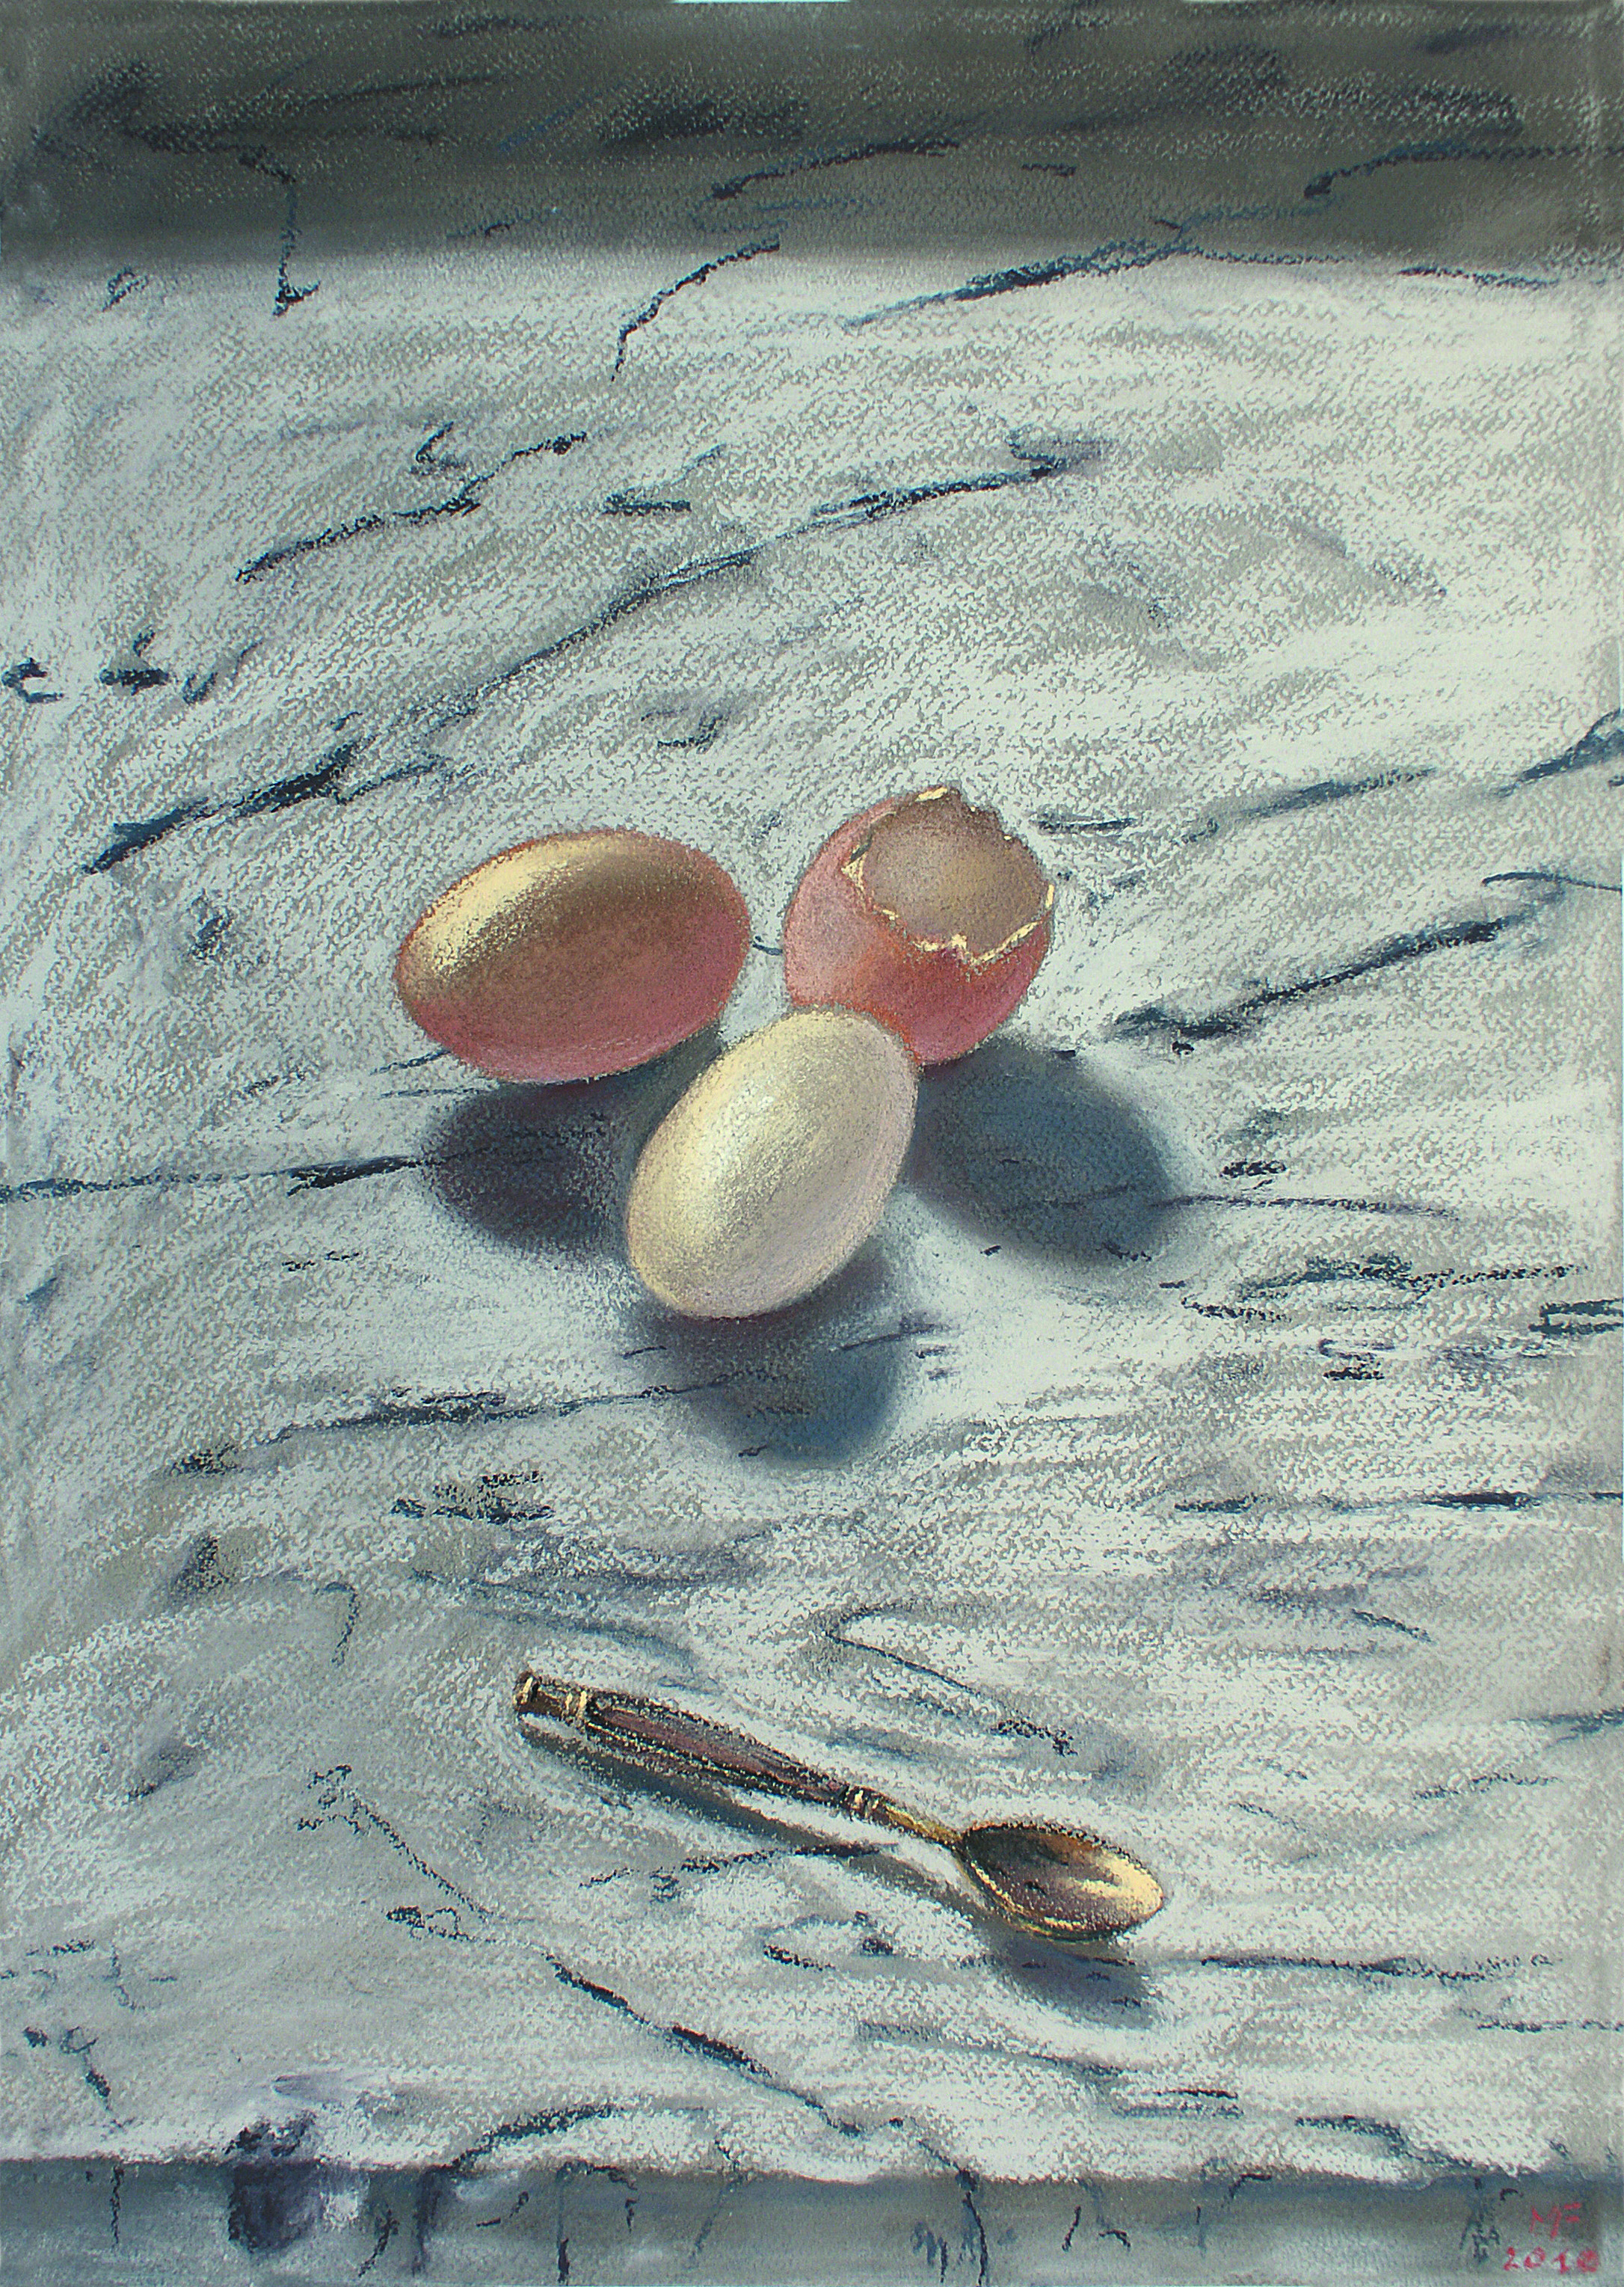 B 8) Uova e cucchiaino, 2010, pastello su carta Ingres, 50x35